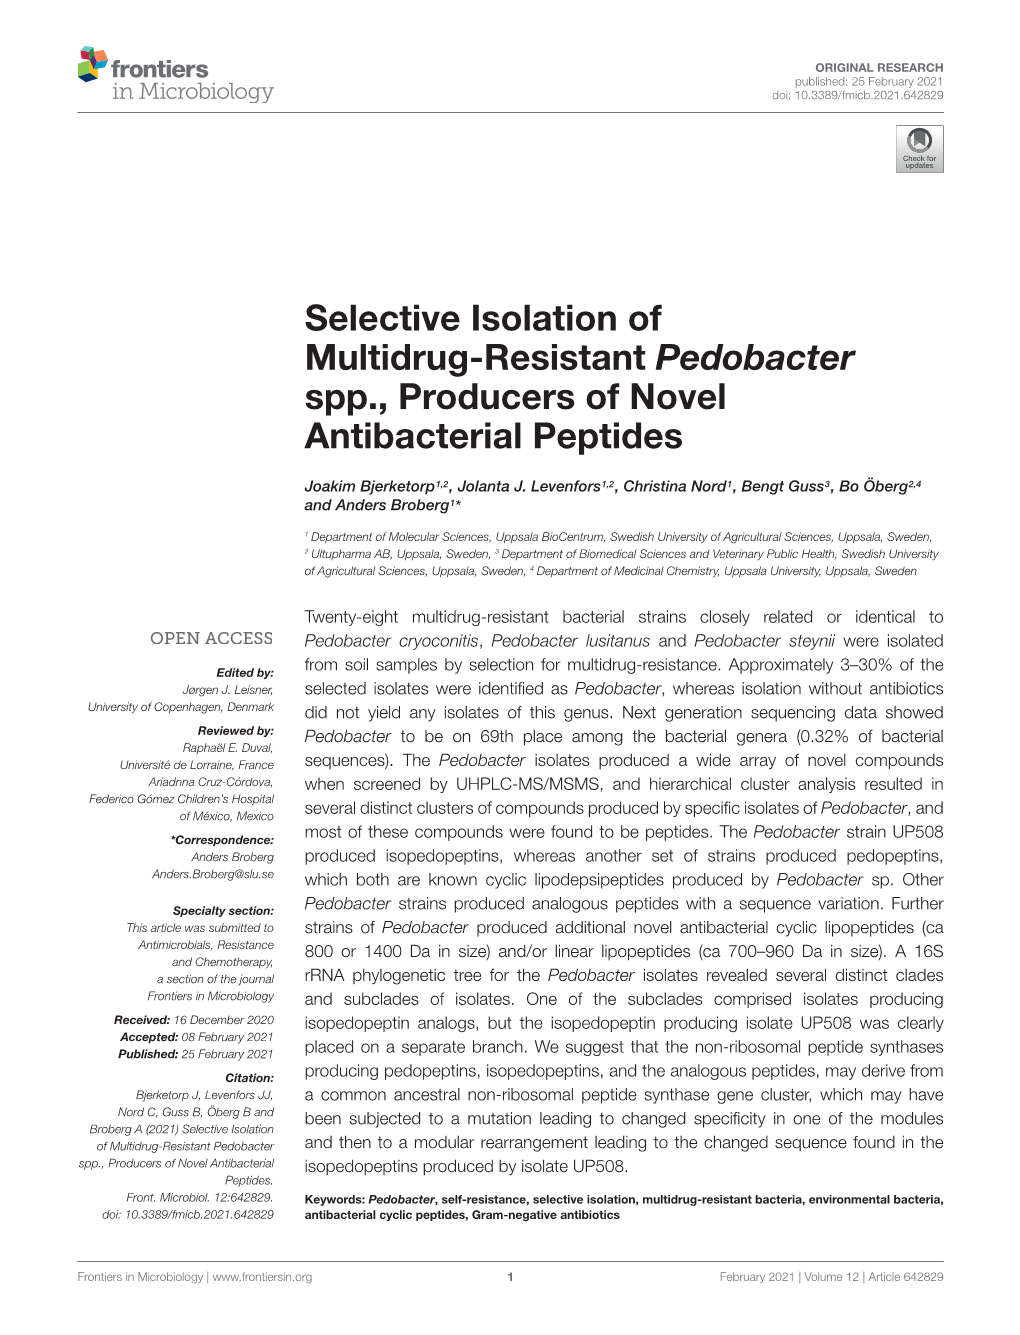 Selective Isolation of Multidrug-Resistant Pedobacter Spp., Producers of Novel Antibacterial Peptides